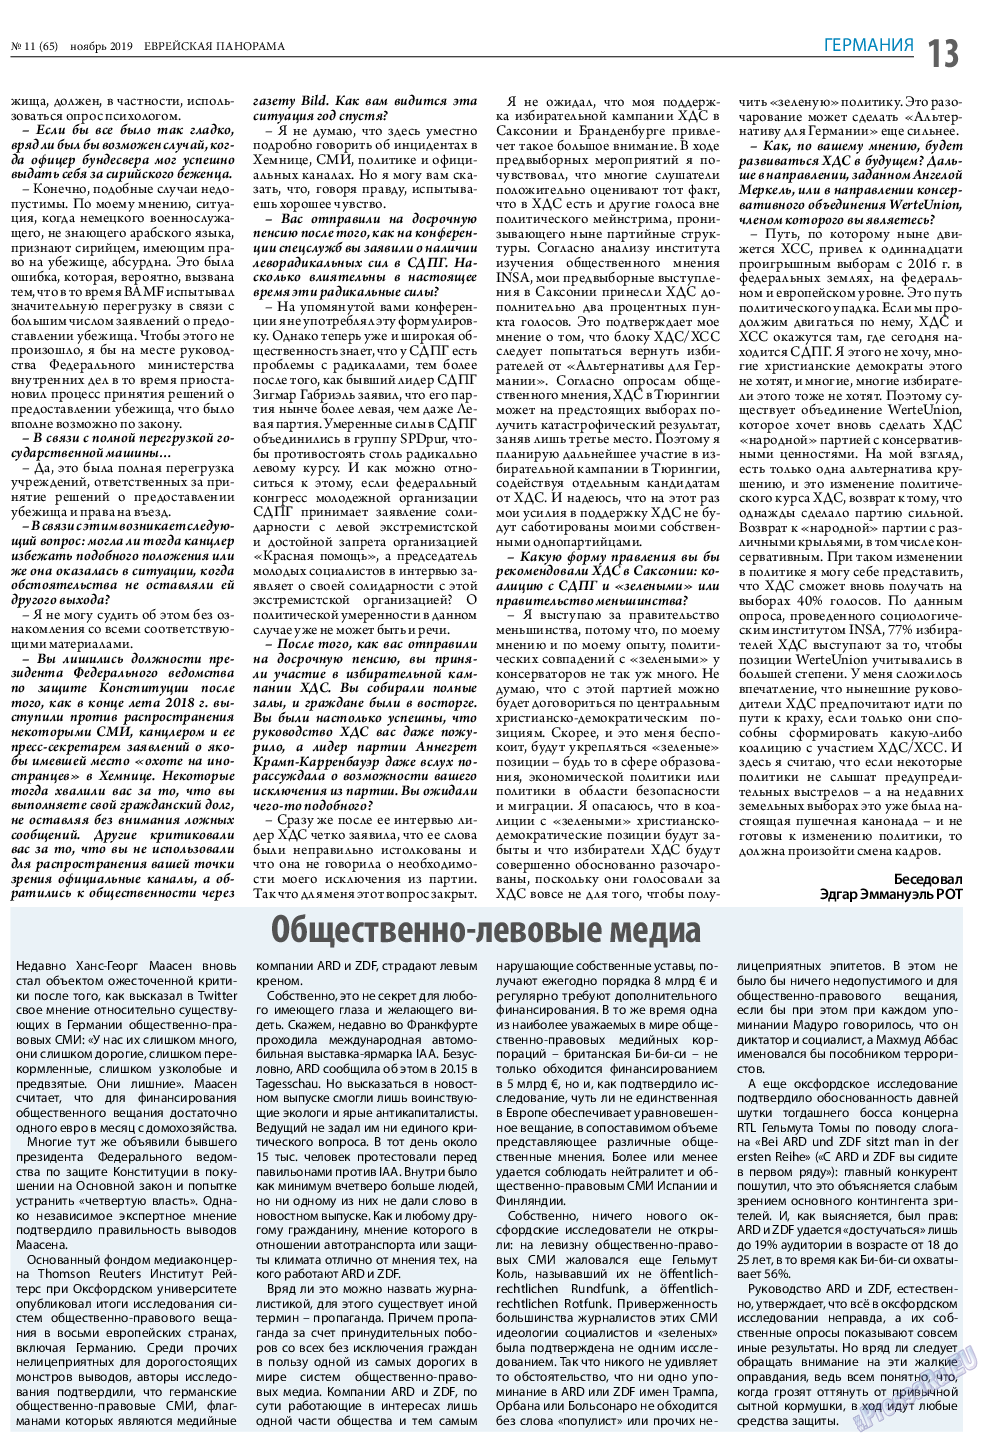 Еврейская панорама, газета. 2019 №11 стр.13